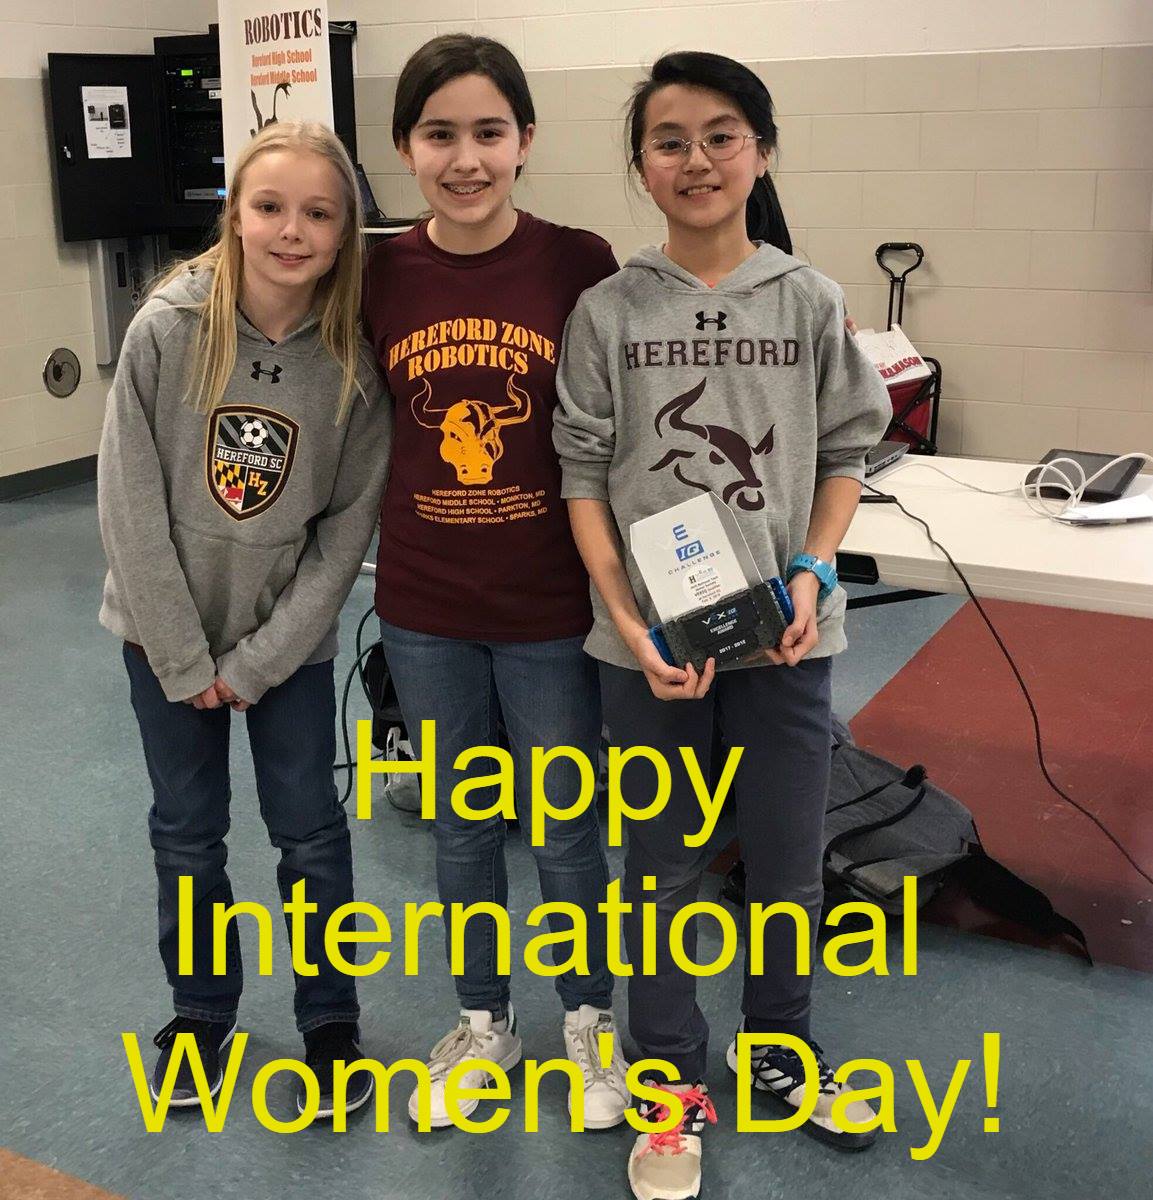 Happy International Women's Day!  Celebrating the great talents of ALL of our female students!
@VerlettaWhite @BaltCoPS @grobertsbcps @Hereford_MS @HMSCounselors 
#InternationalWomansDay #girlsrule #CelebrateScience #celebrategirls